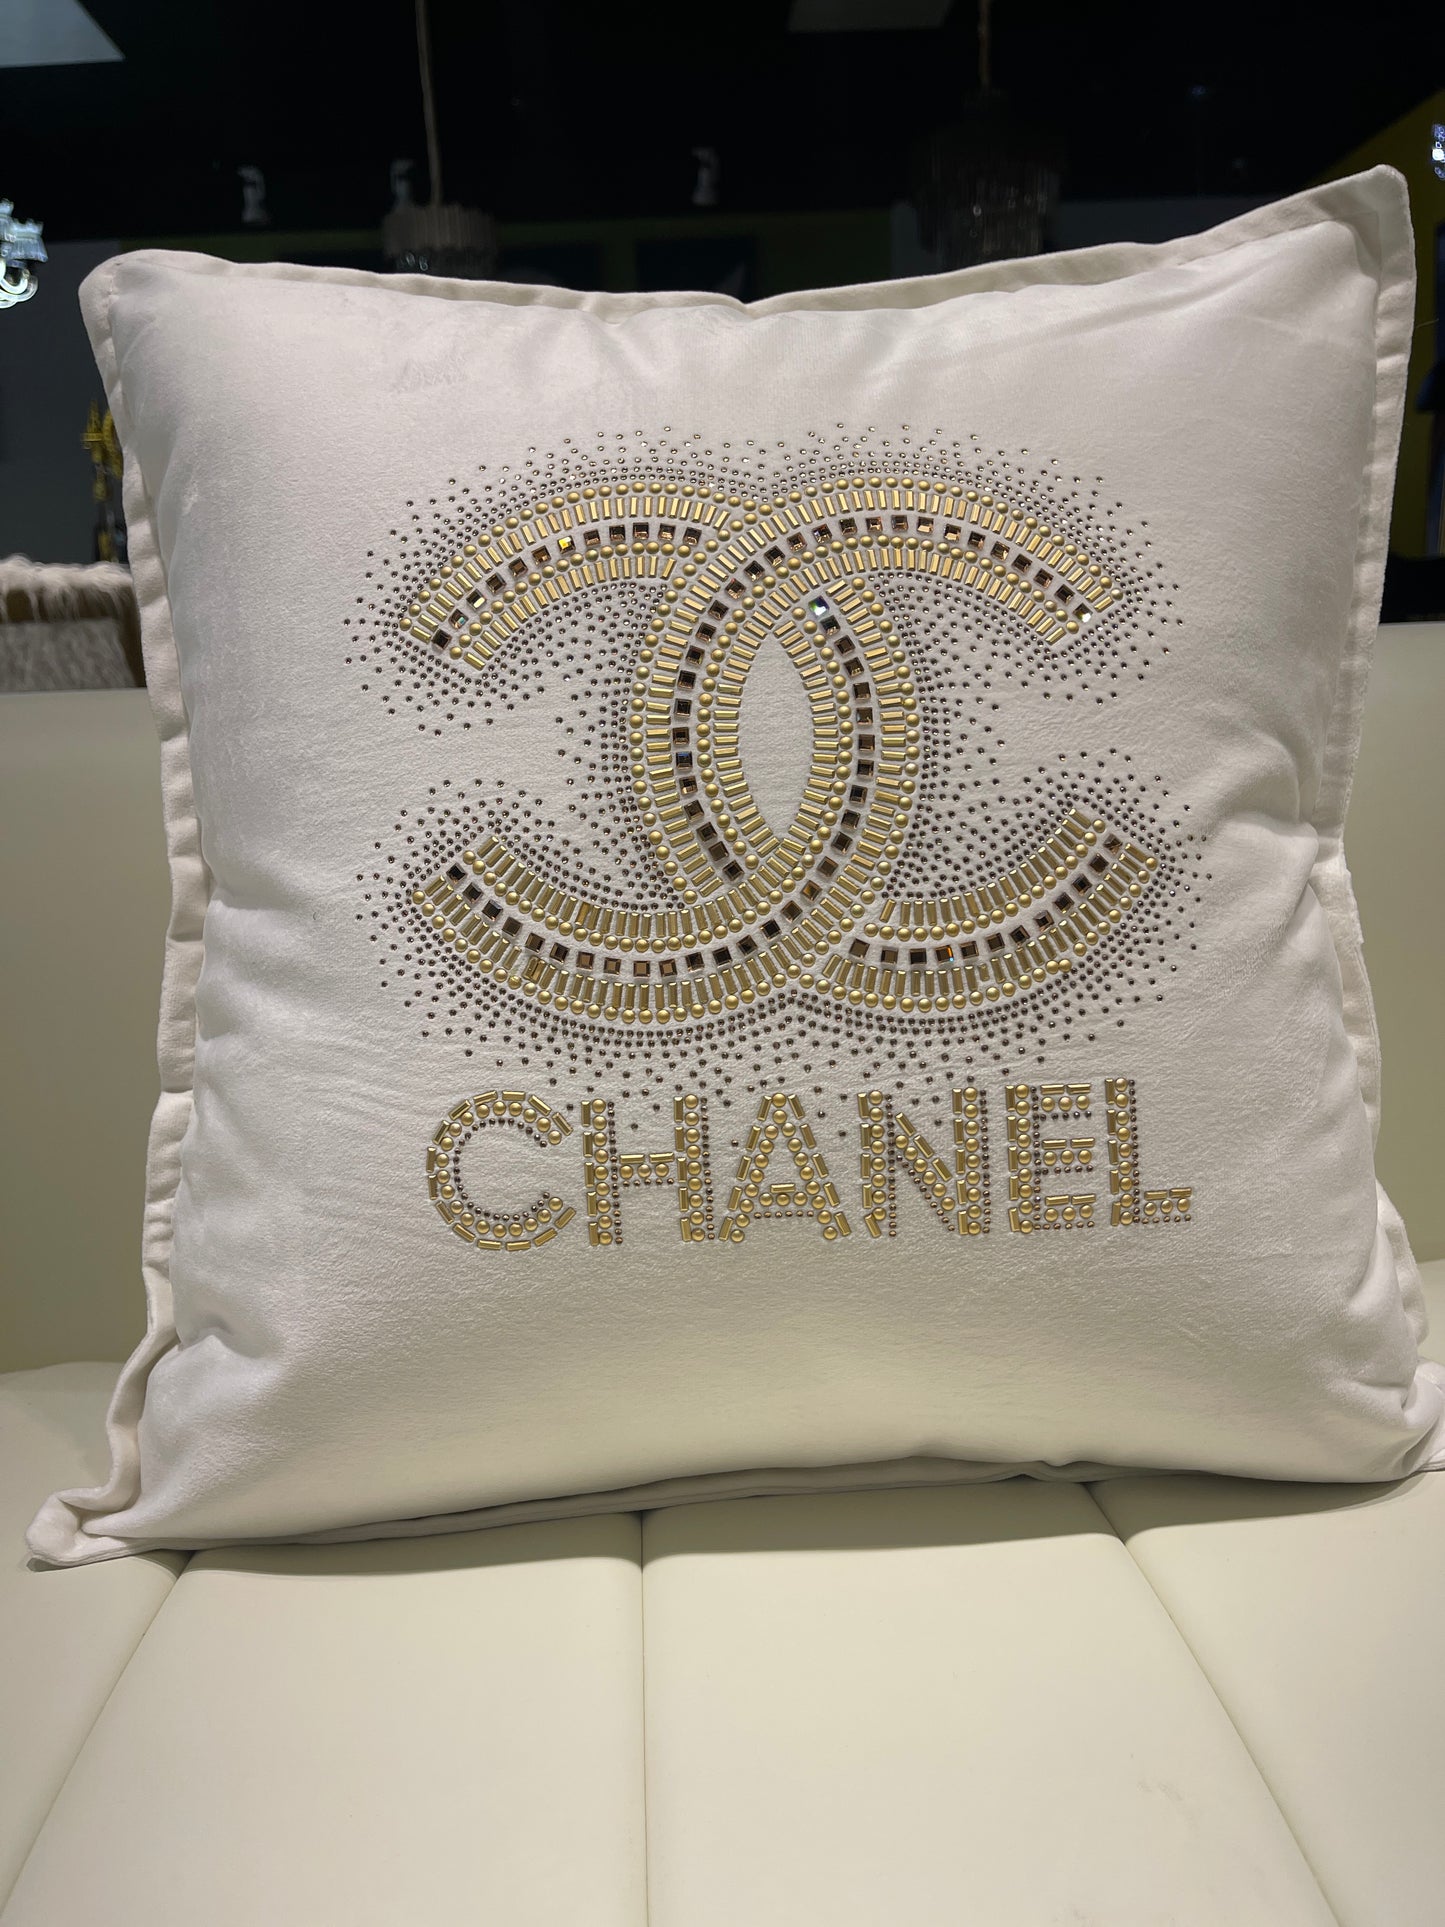 Cream Chanel Throw pillow